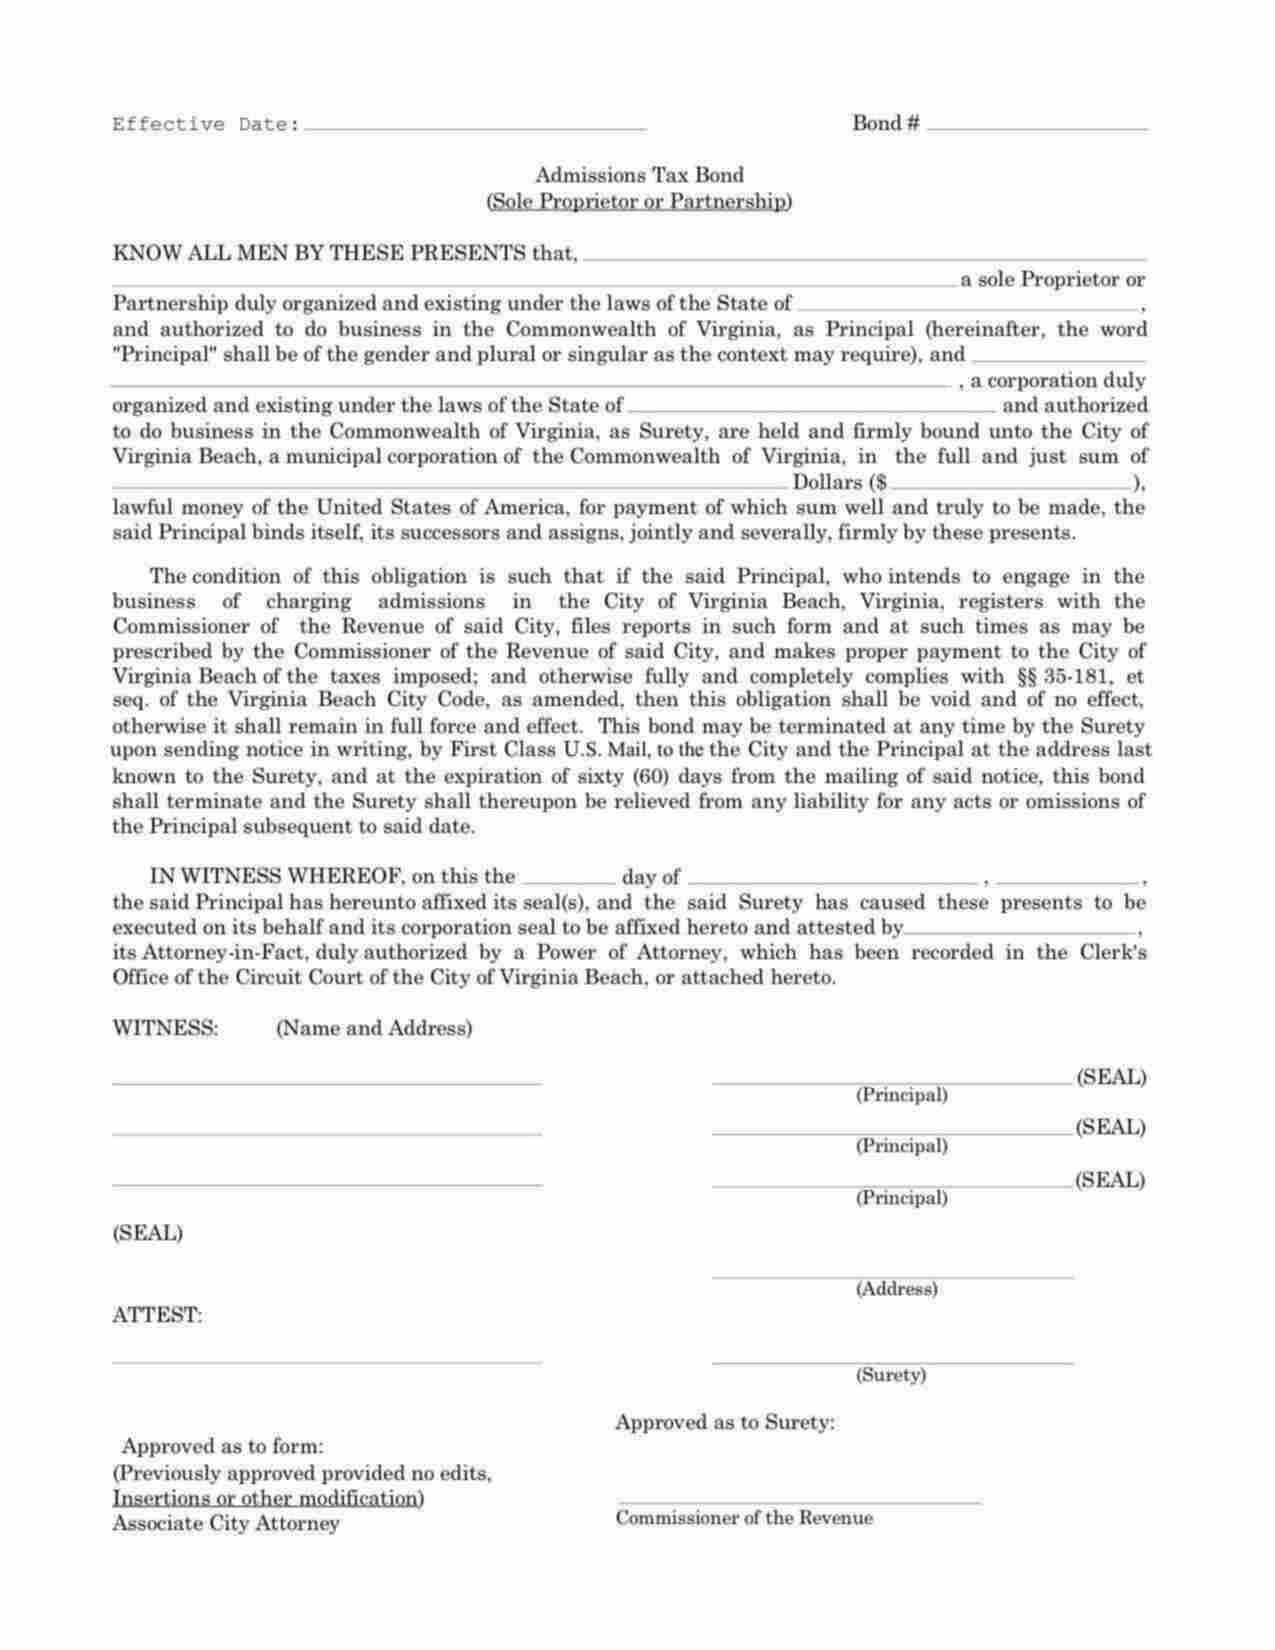 Virginia Admissions Tax Bond Form